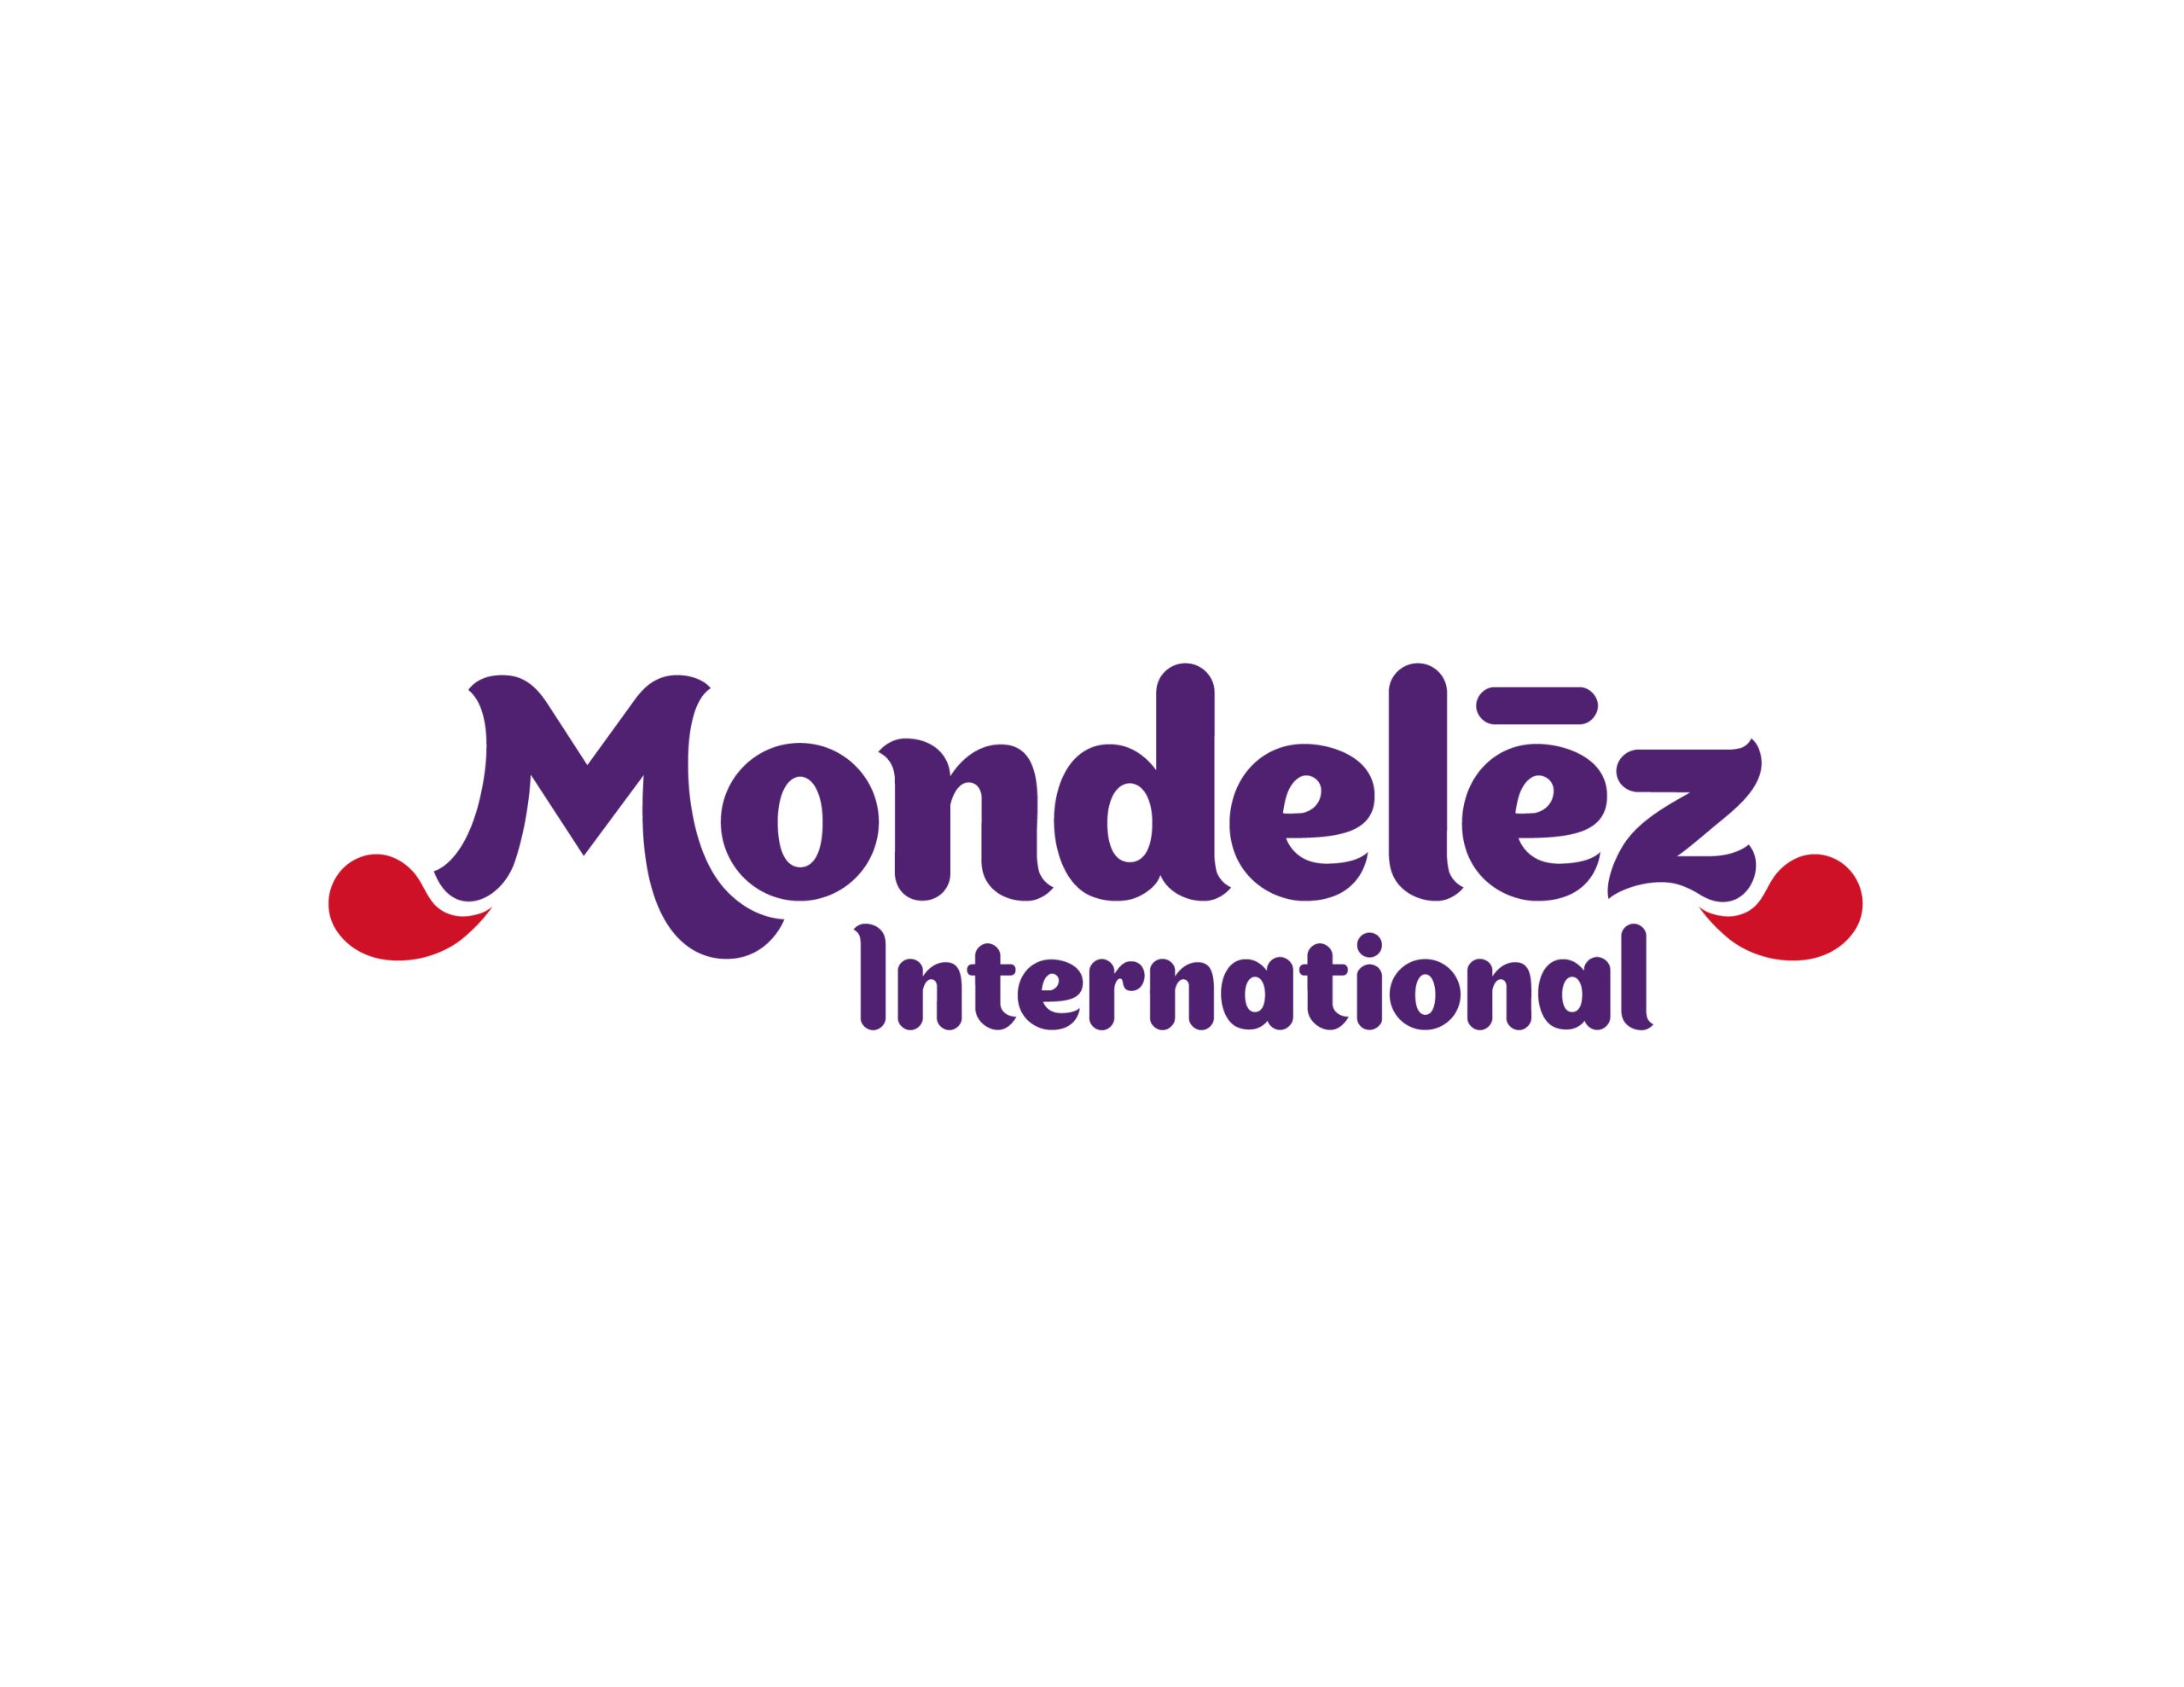 Mondelez International scaled